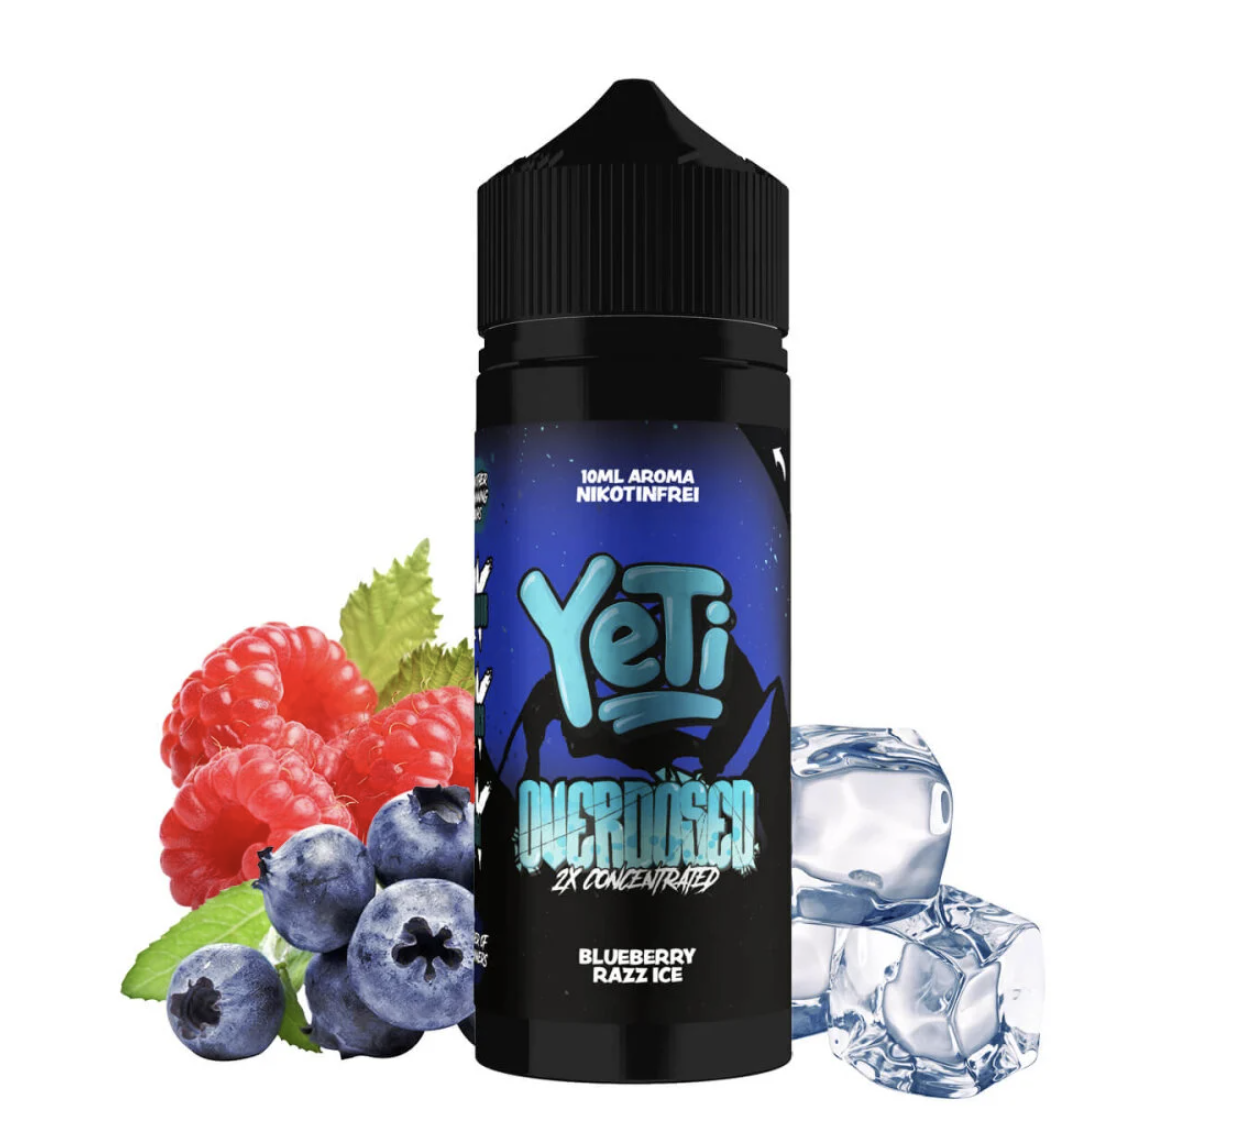 Yeti Overdosed | Blueberry Razz Ice |  Longfill Aroma 10ml in 120ml Flasche